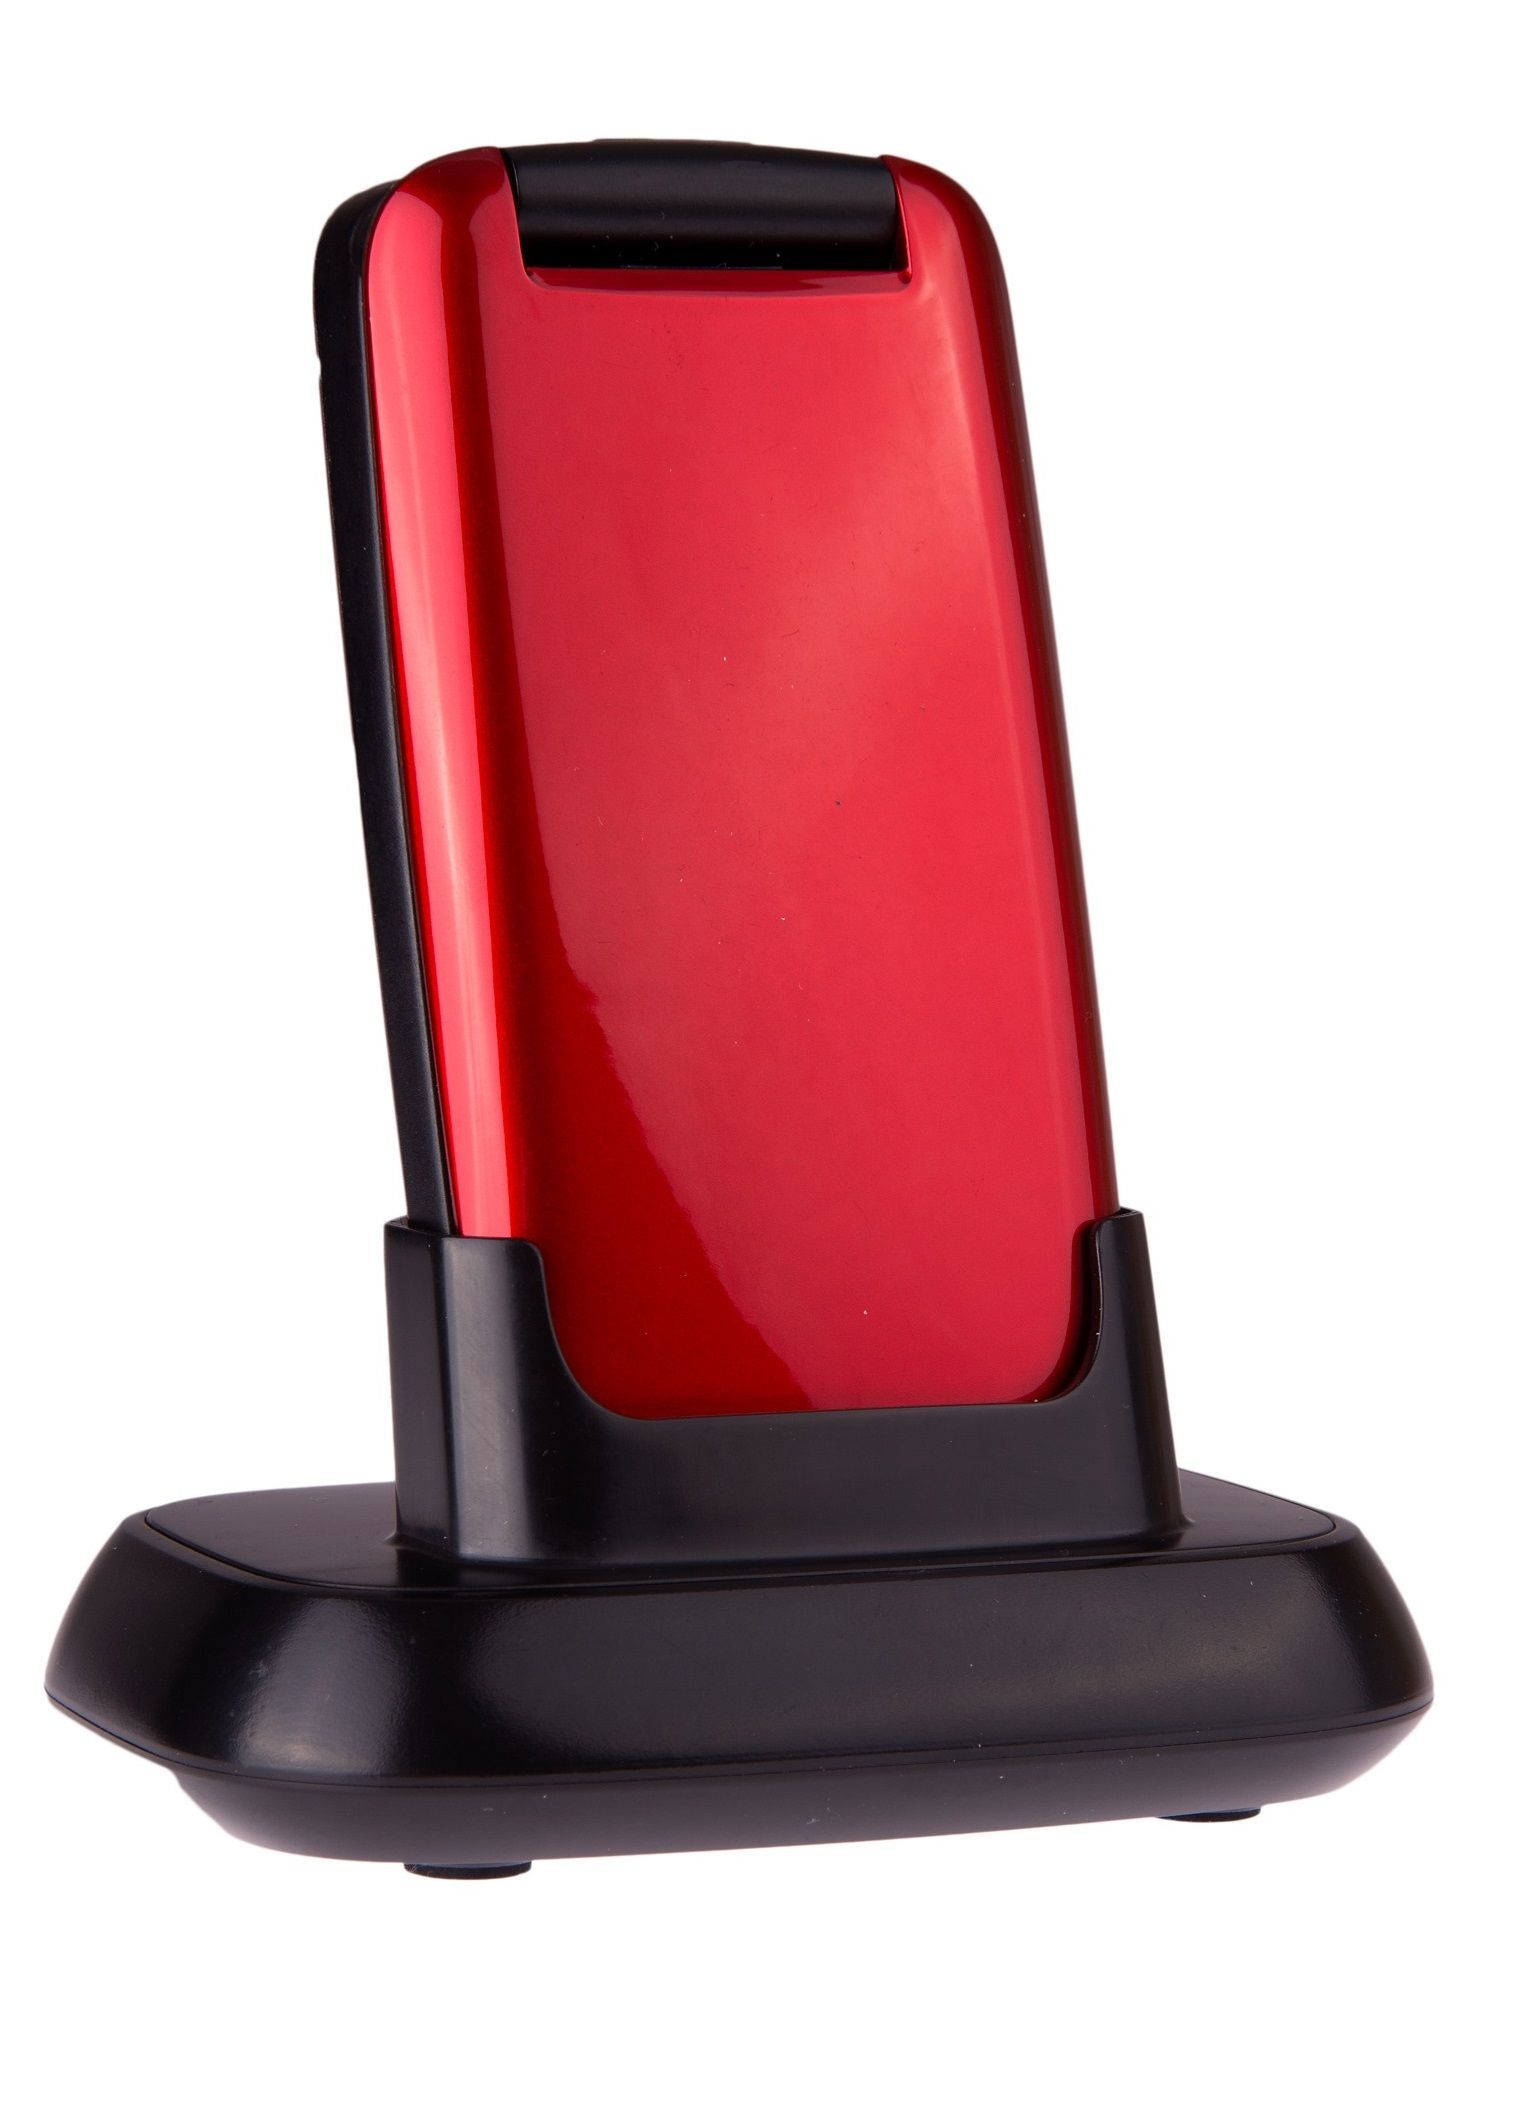 TTfone Star (TT300) Red Big Button Mobile Phone for the Elderly